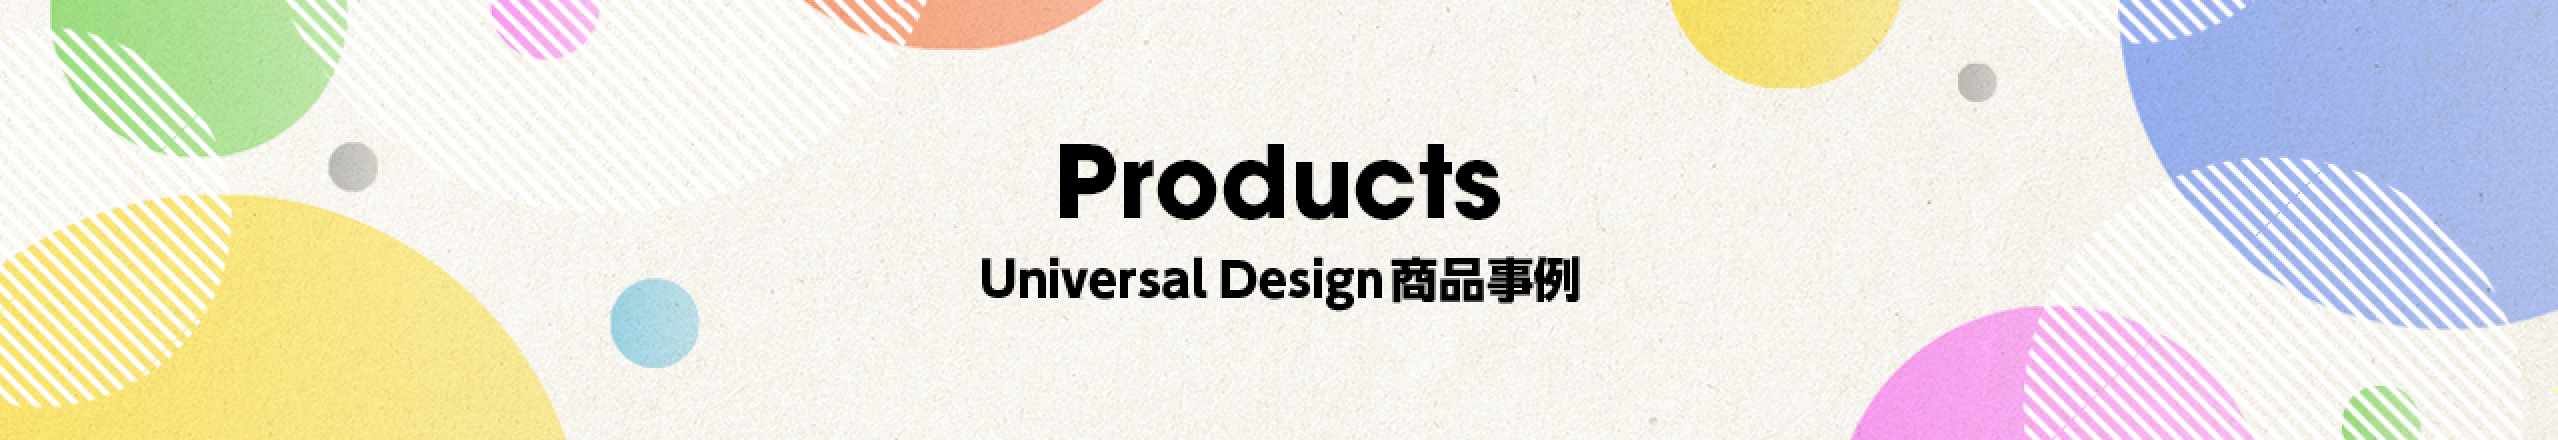 products Universal Design商品事例